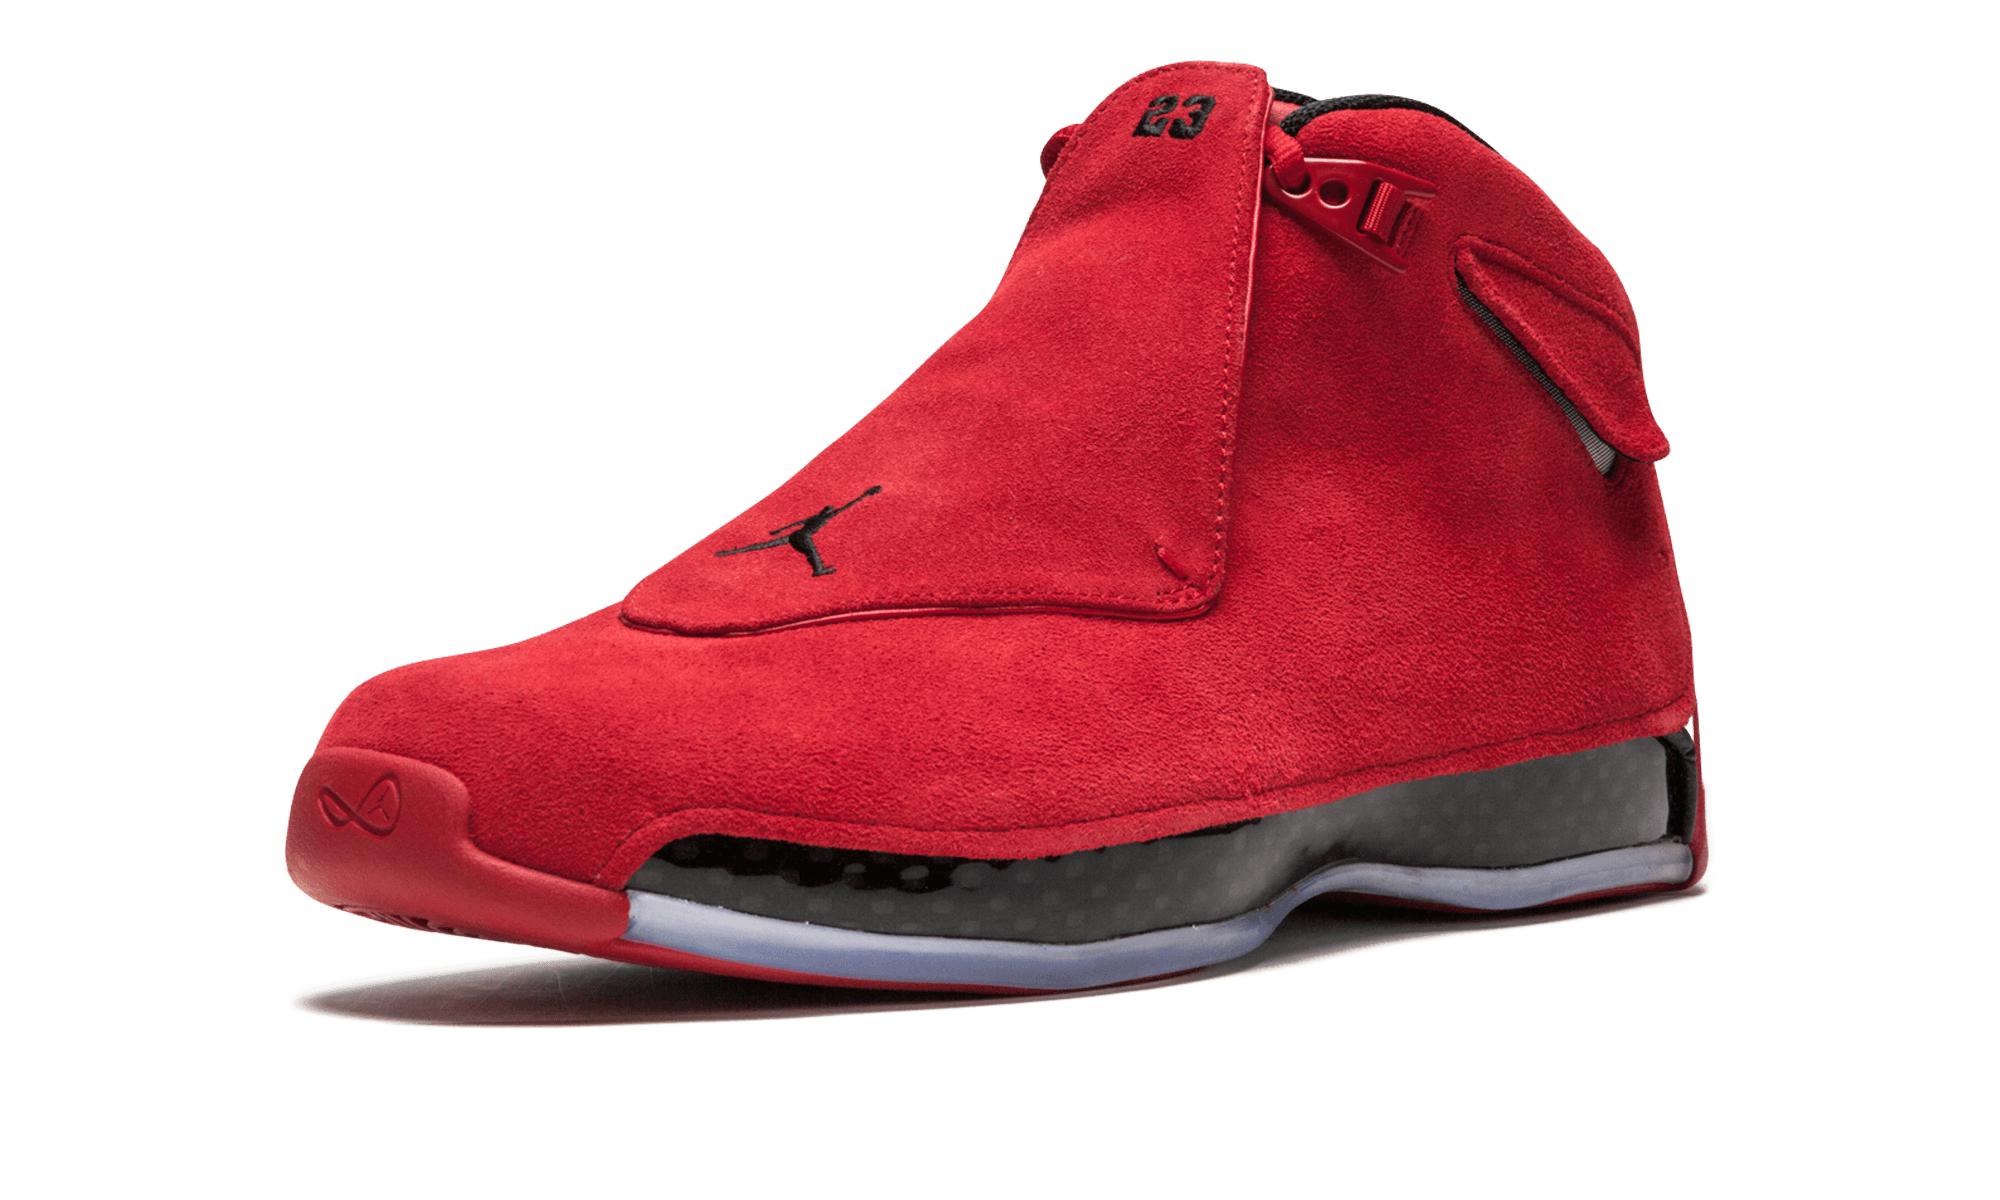 Nike Suede Air Jordan 18 Retro in Red 